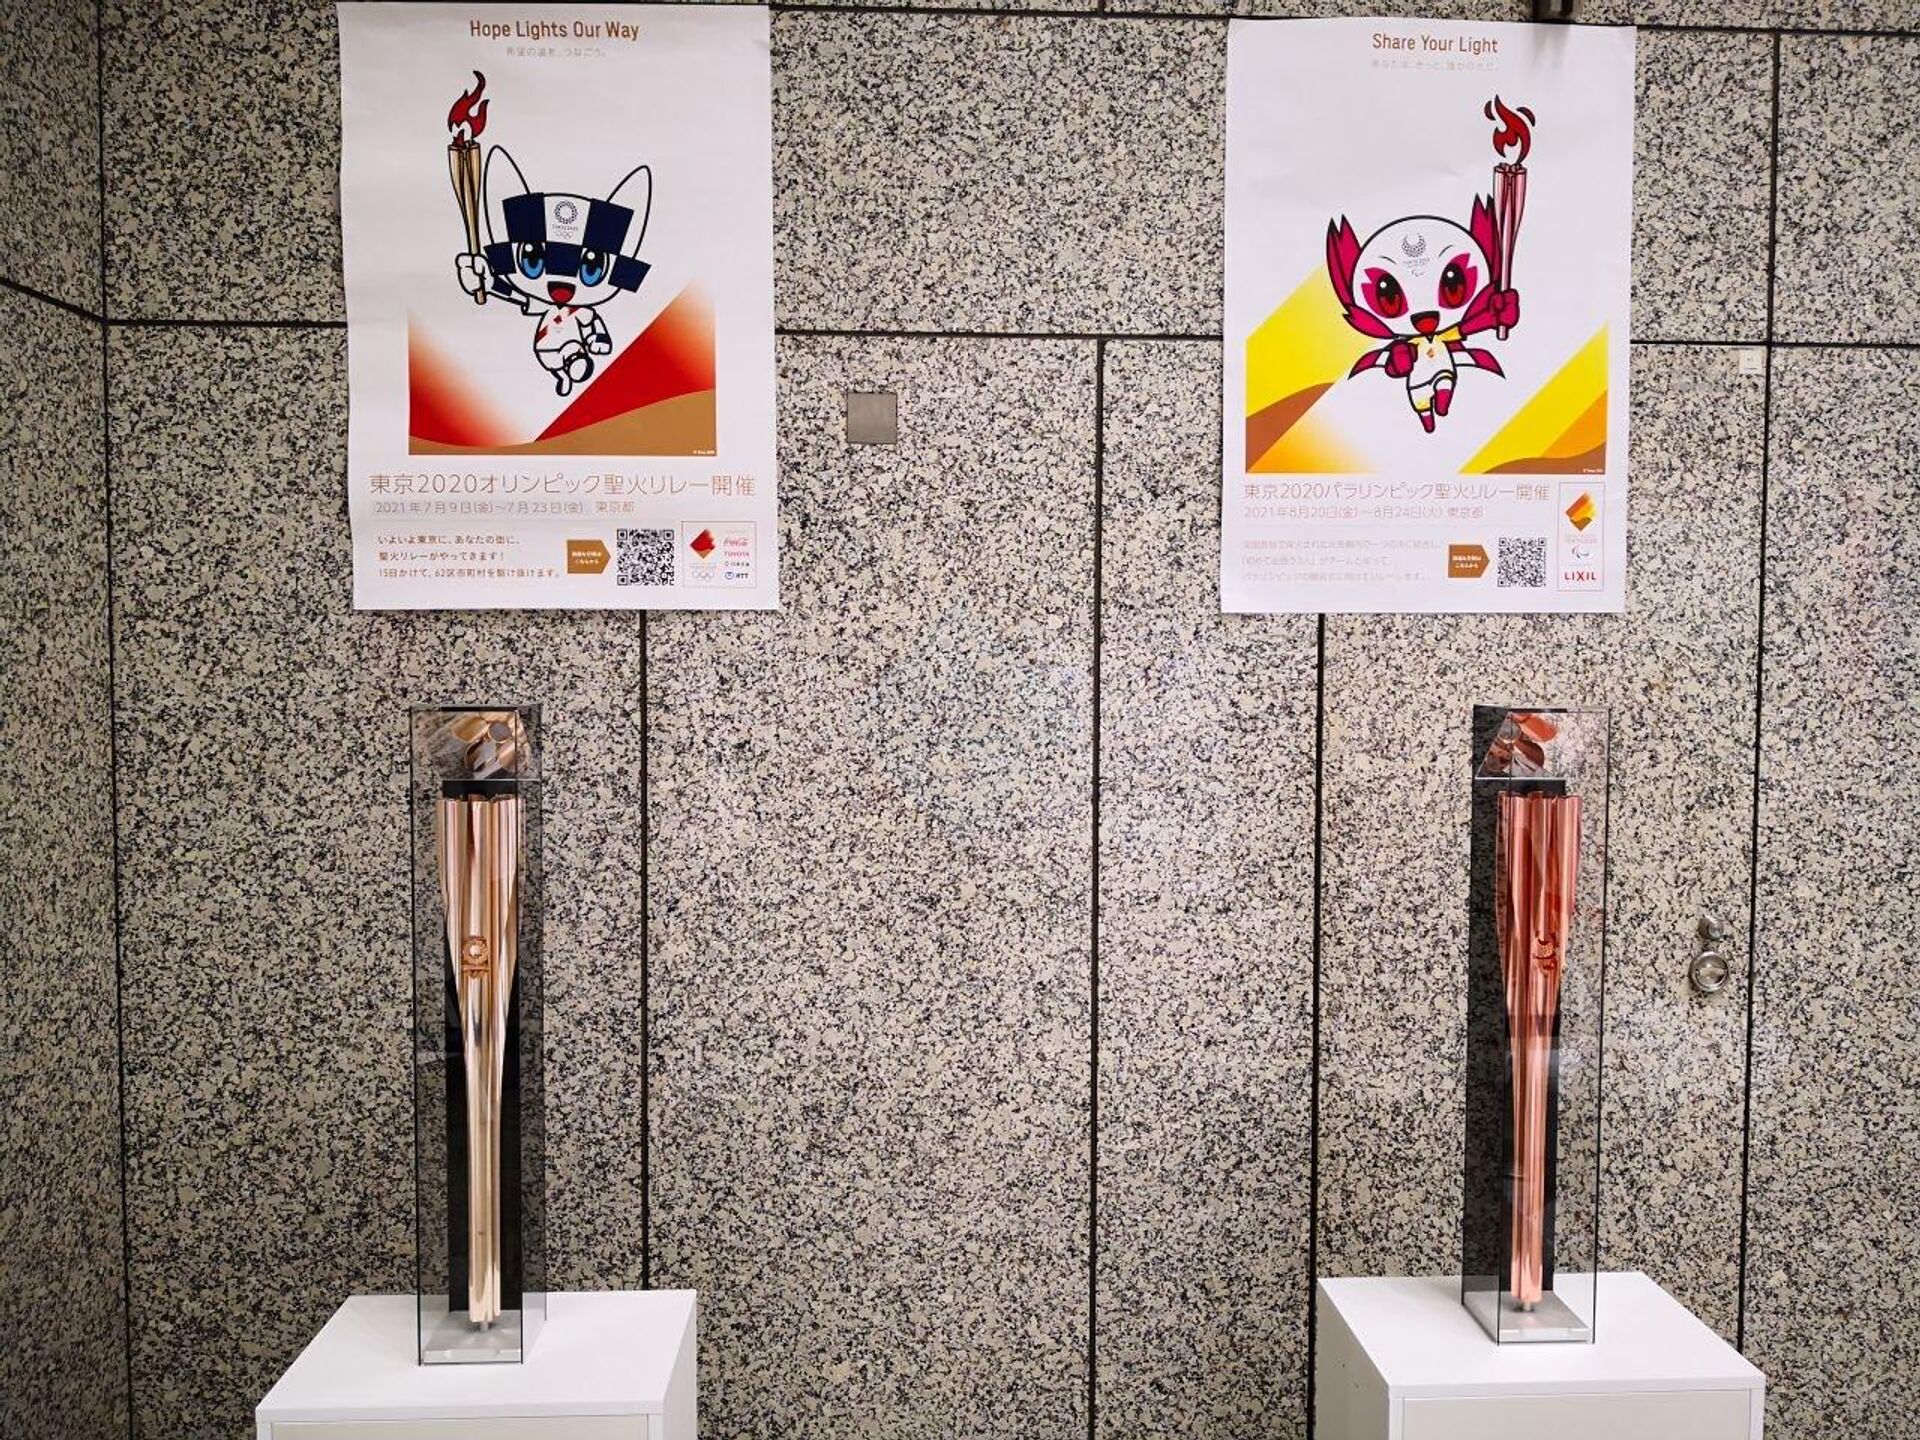 Факелы отложенных на год из-за COVID-19 Олимпиады-2020 и Паралимпийских игр в Токио  - РИА Новости, 1920, 24.05.2021